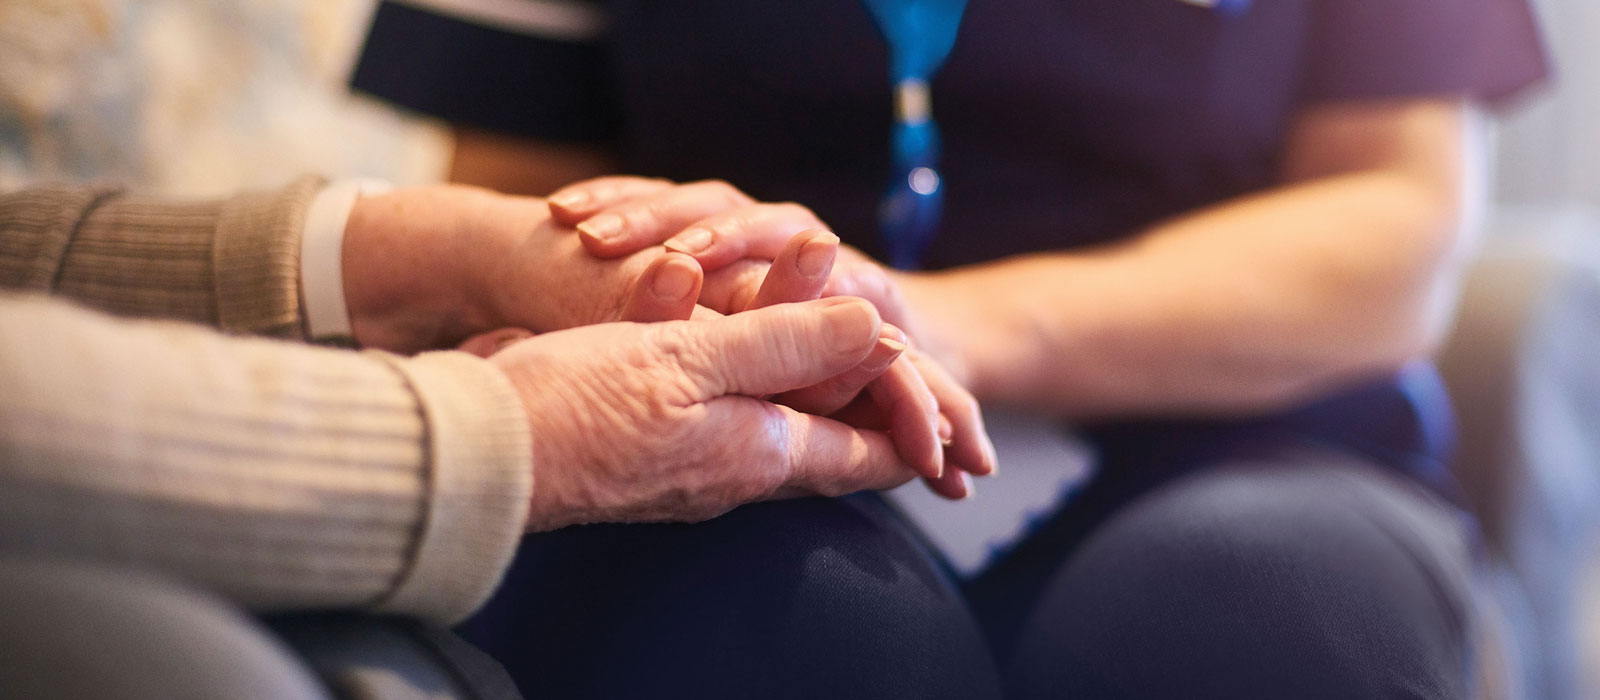 Palliative Care Resources Comfort Nurses Through COVID-19 Stress, Dilemmas, and Grief